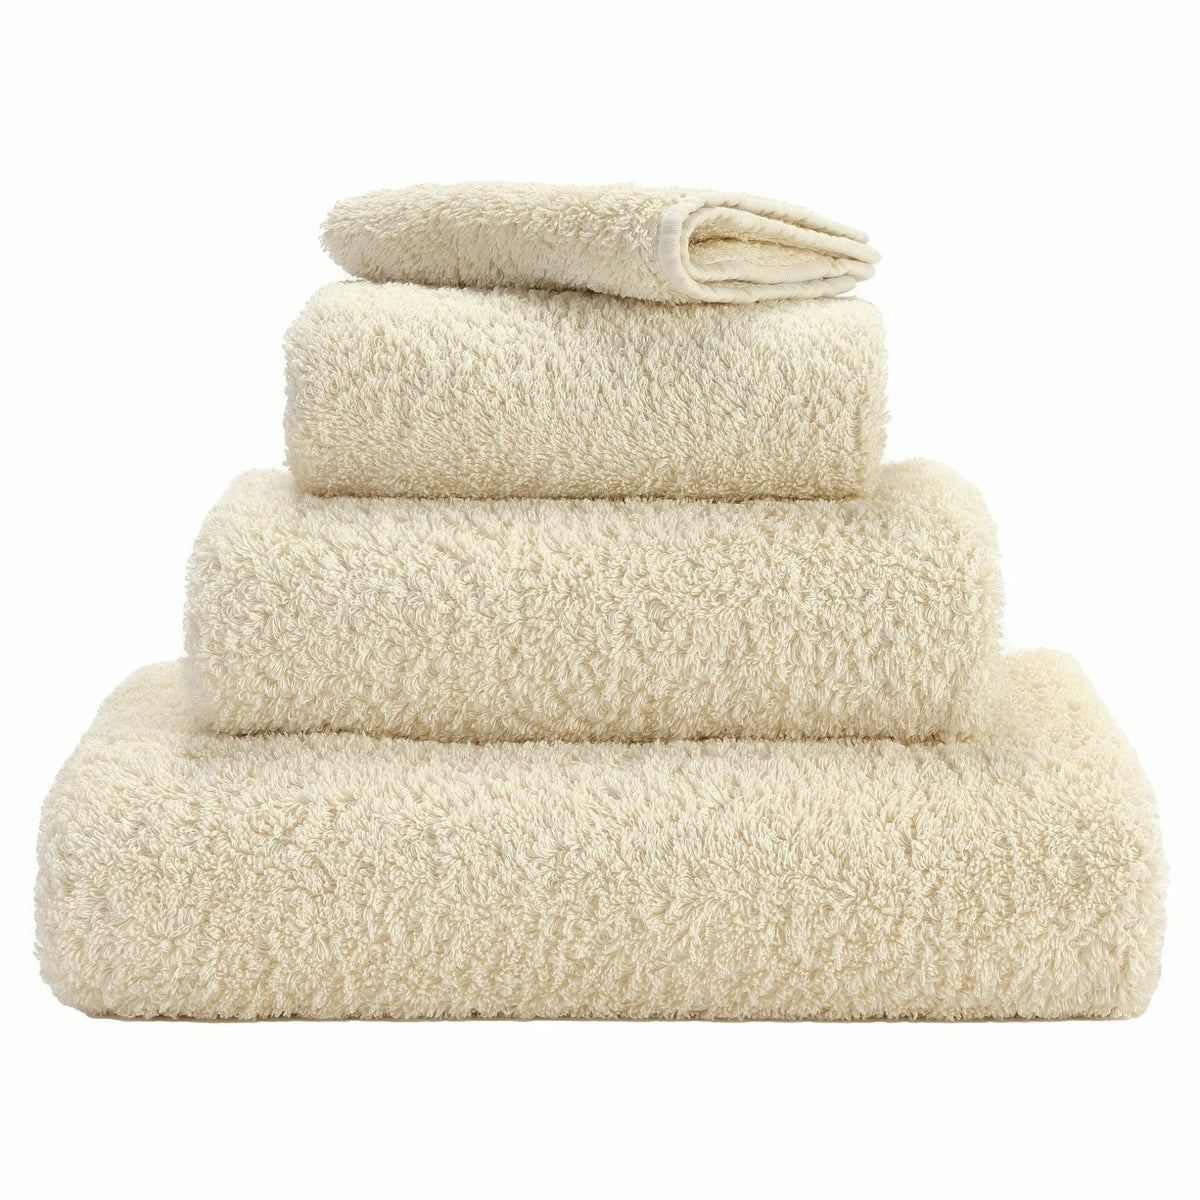 Abyss Super Pile Bath Towels & Mats - Ecru